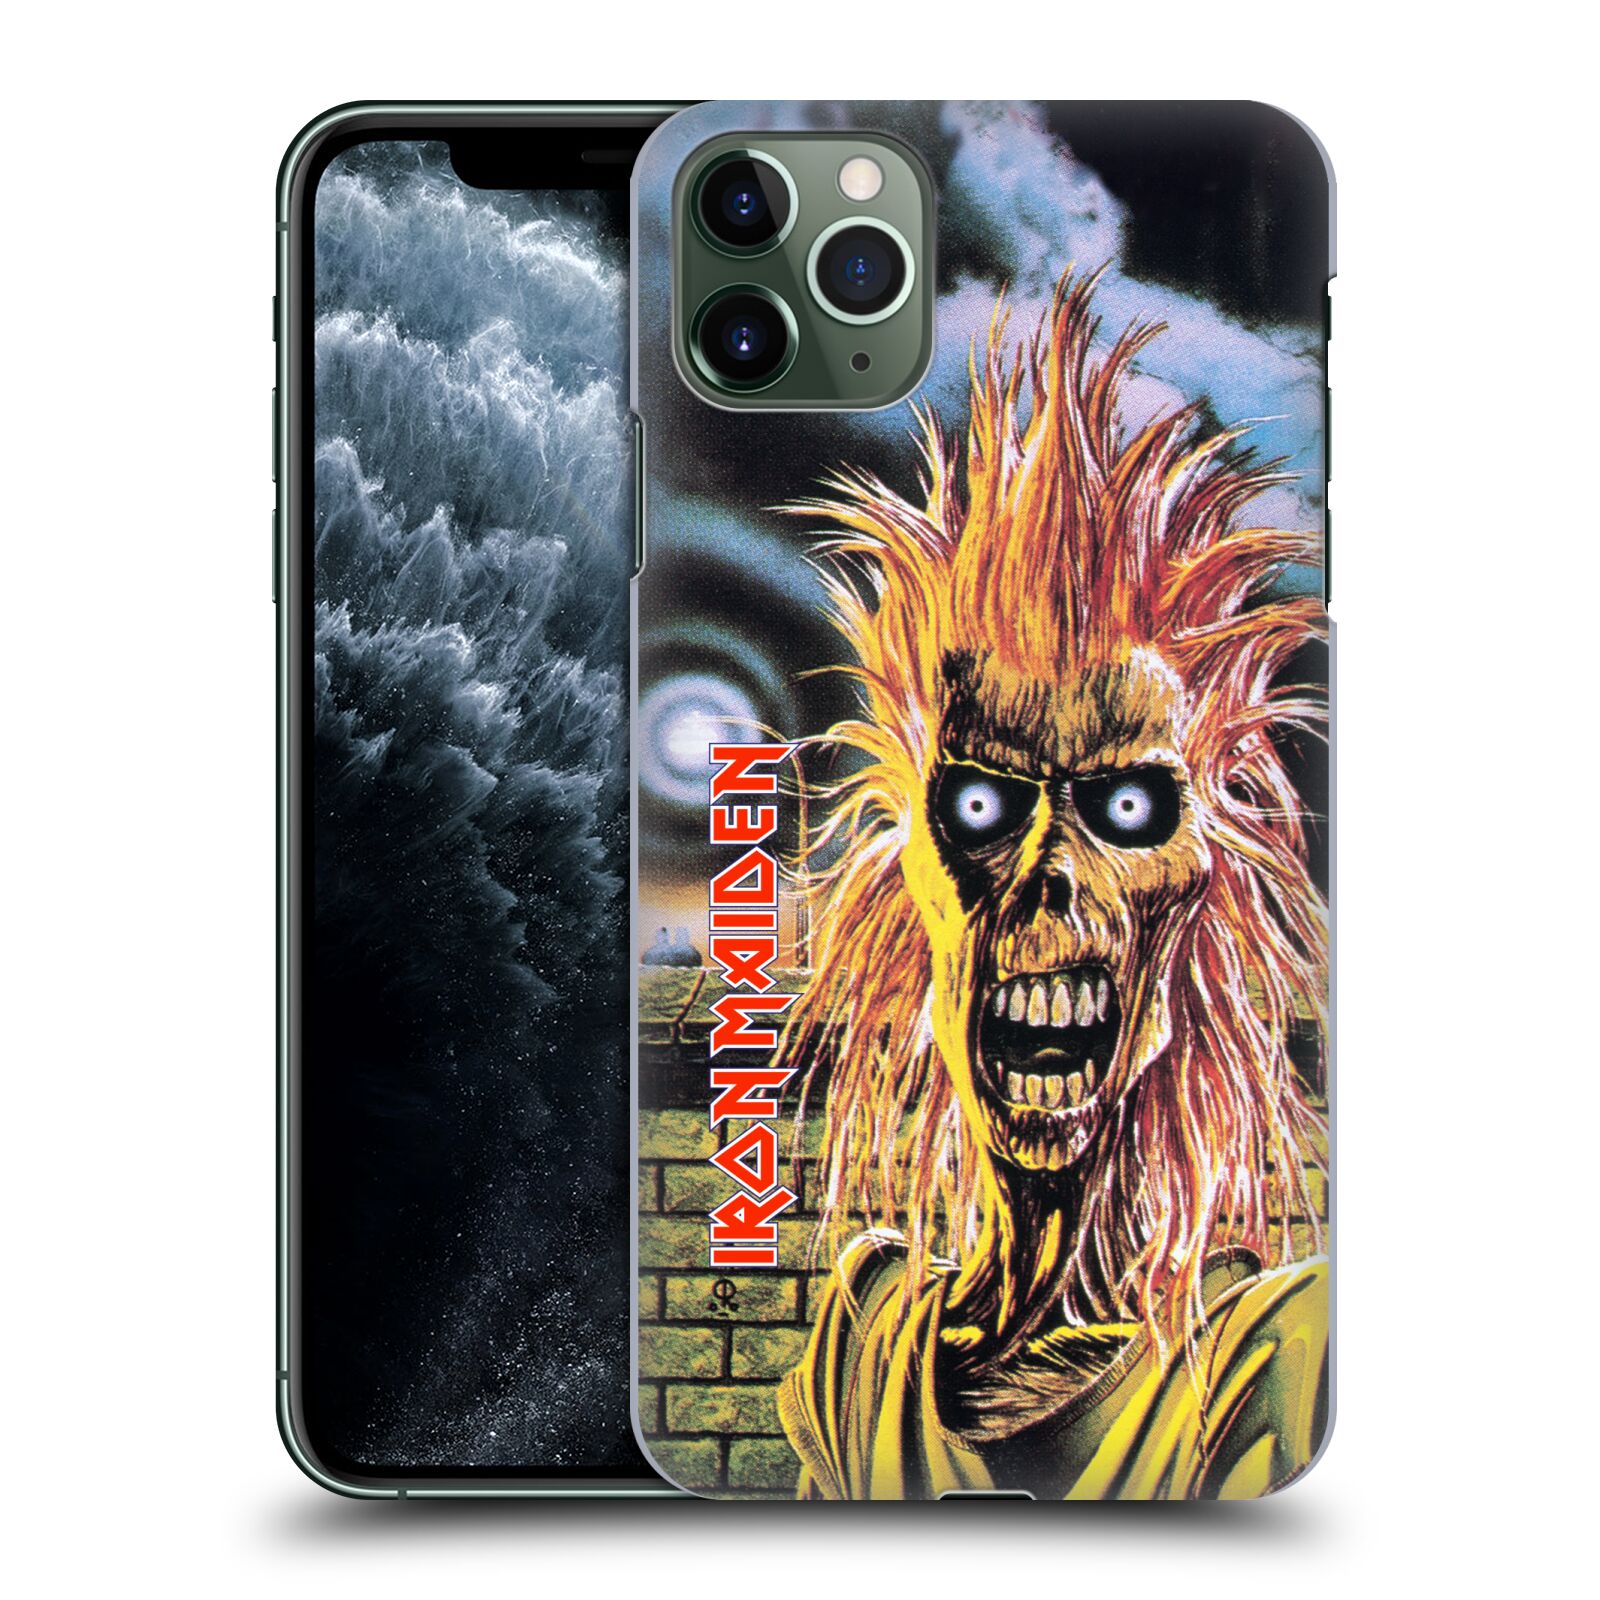 Pouzdro na mobil Apple Iphone 11 PRO MAX - HEAD CASE - Heavymetalová skupina Iron Maiden punker